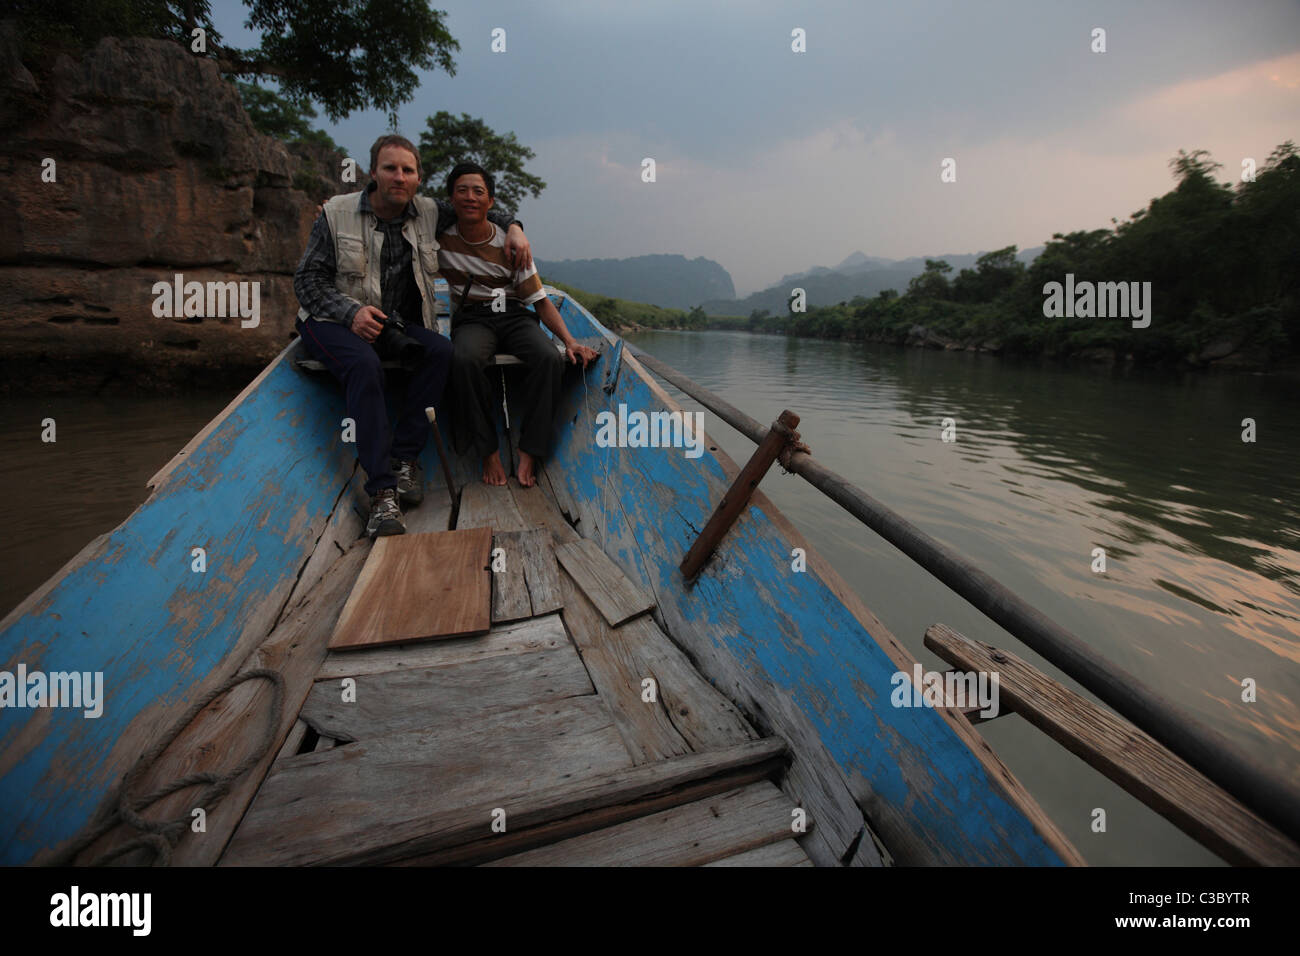 An Bord ein kleines Holzboot auf dem Fluss Sohn auf Sohn Trach, Phong Nha Ke Bang Nationalpark in Vietnam am späten Nachmittag Stockfoto